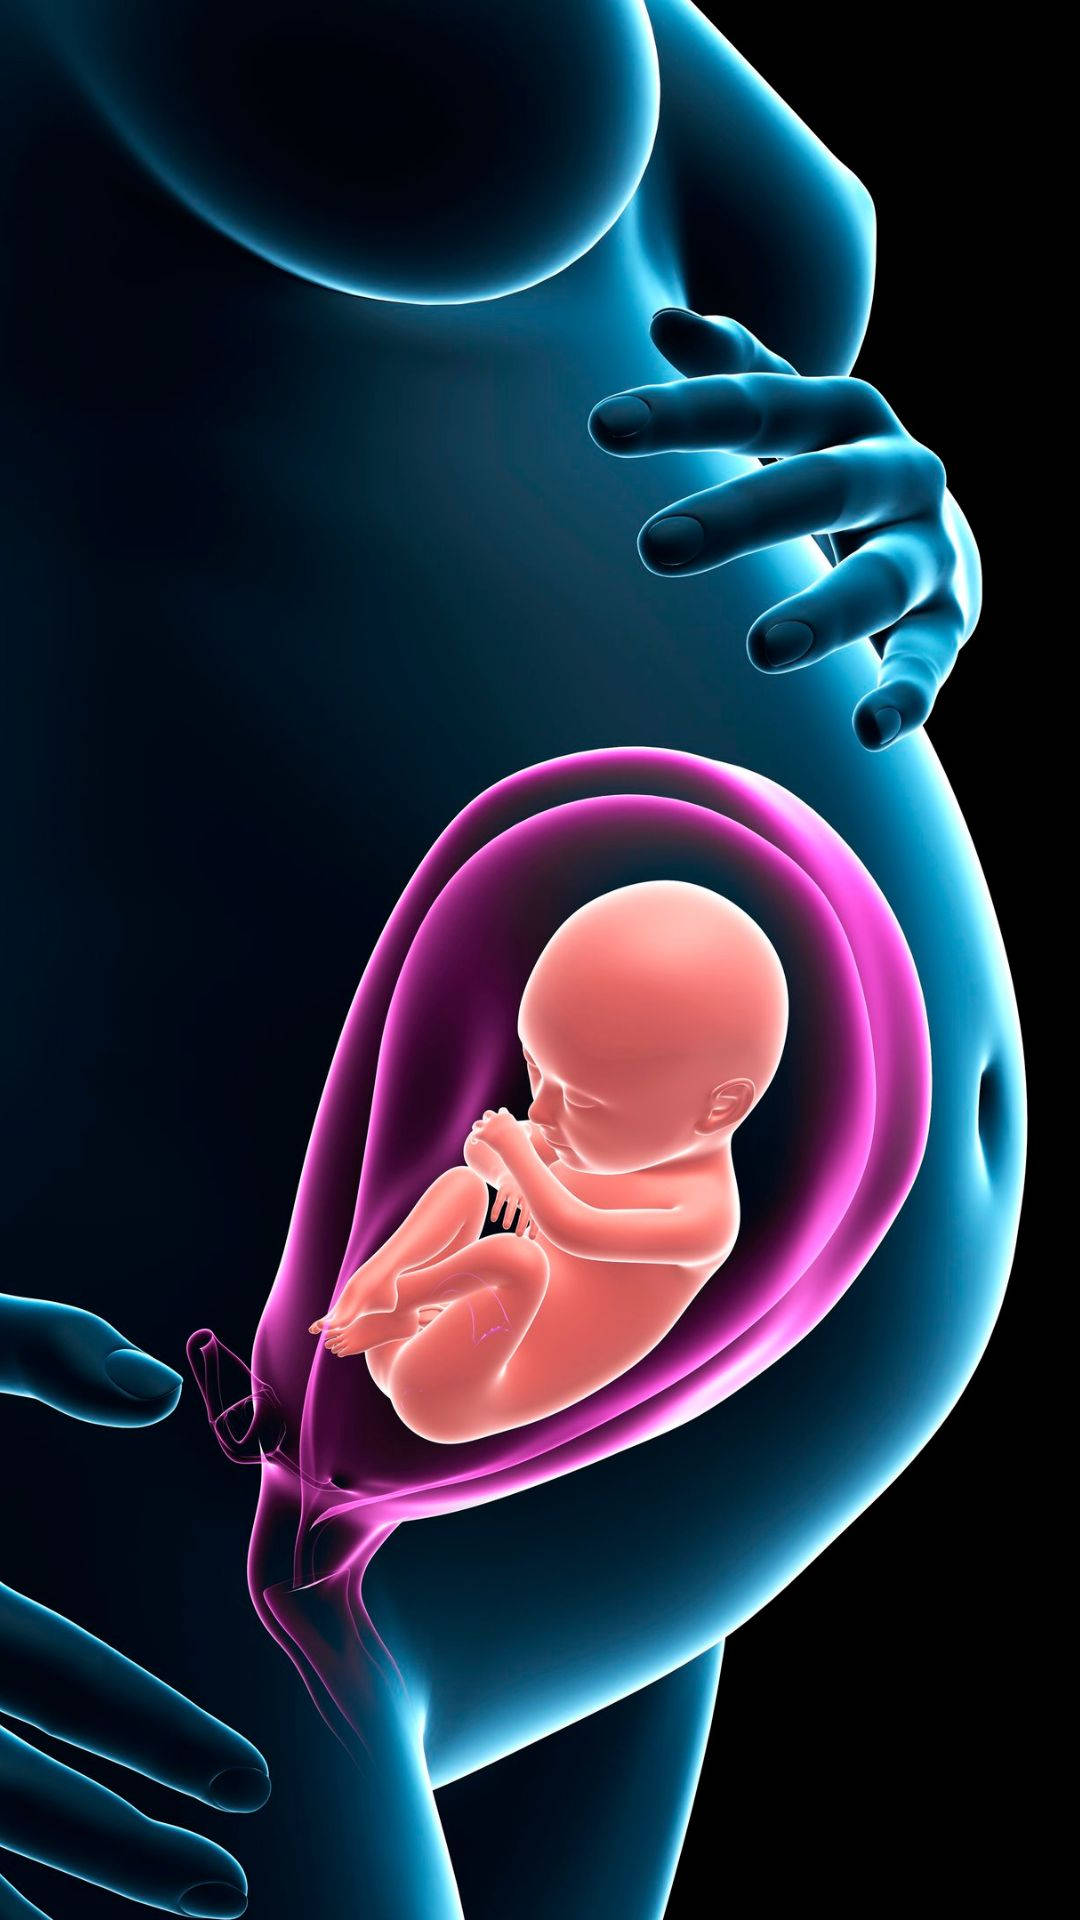 Pregnancy Graphic Body Model Wallpaper